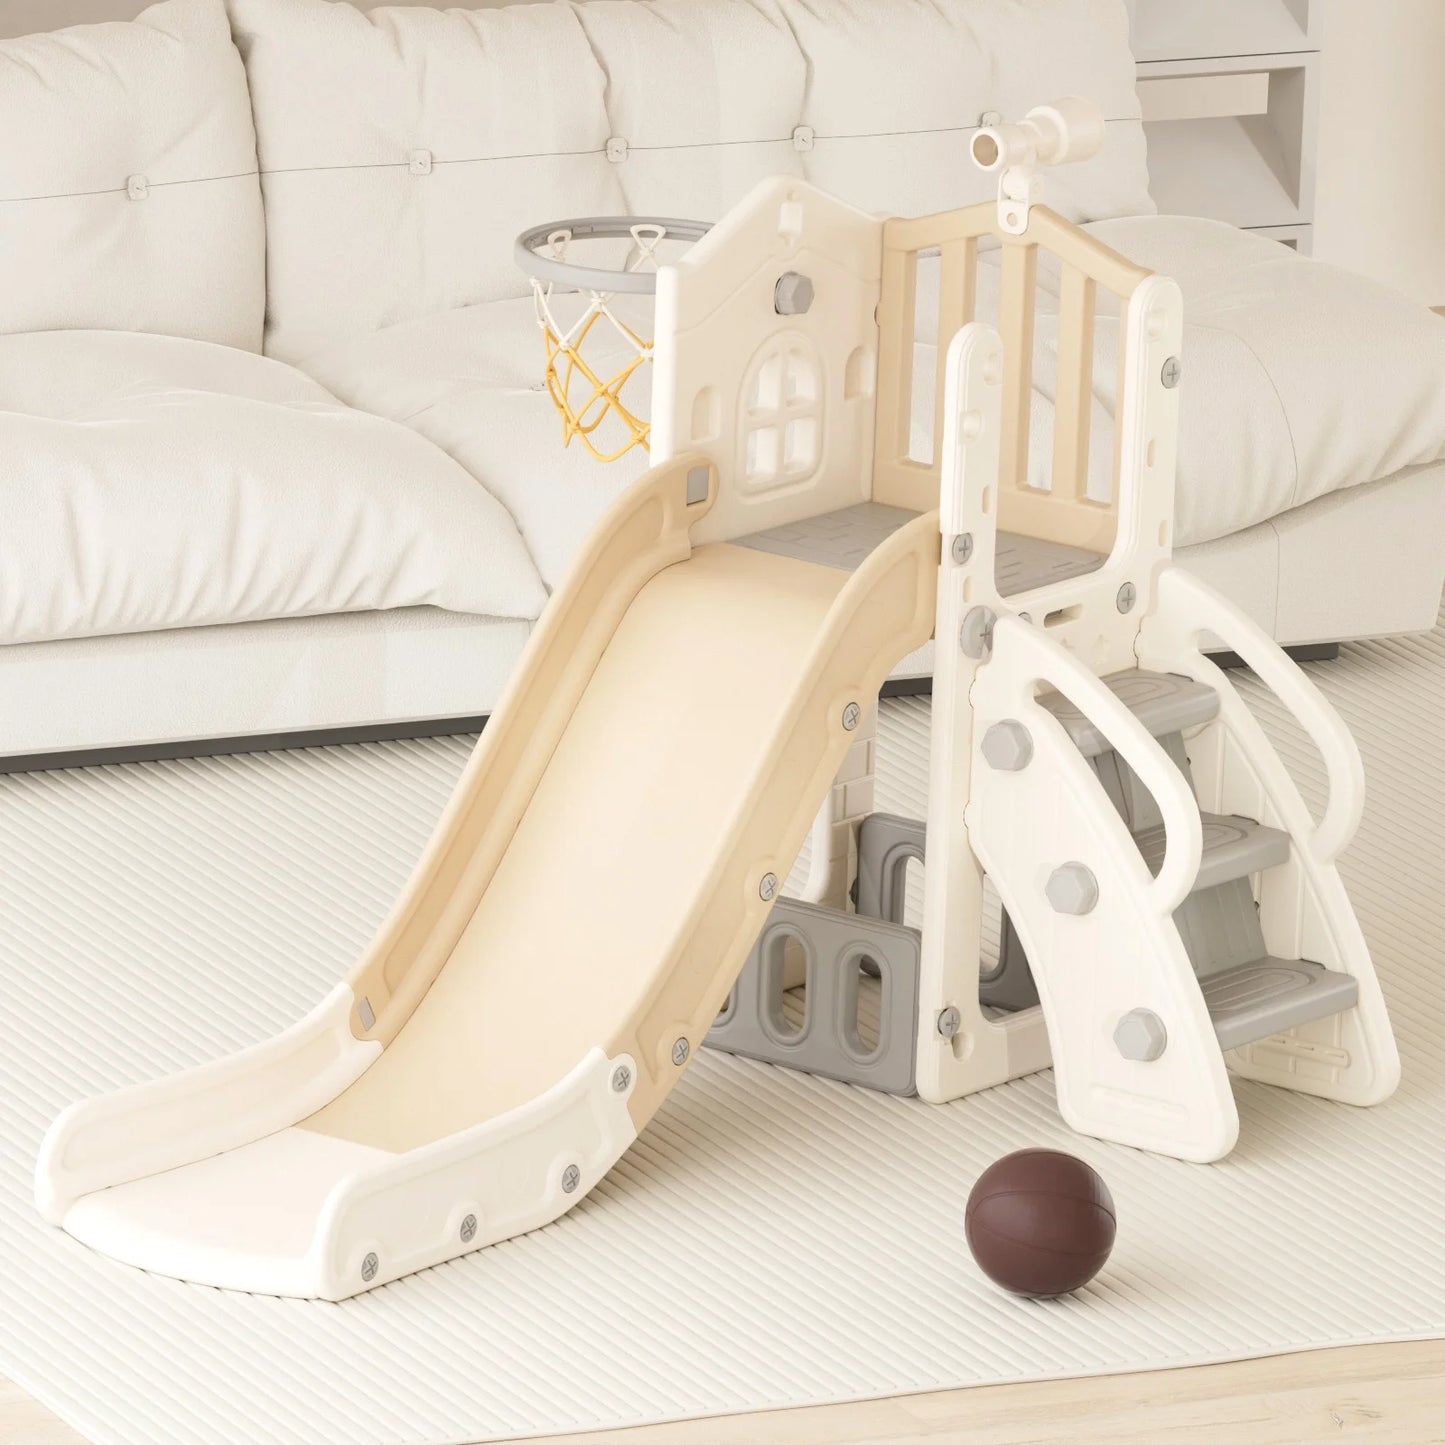 Toddler Slide Set, Slide for Toddlers Age 1-4 with Basketball Hoop and Ball, Slide for Kids